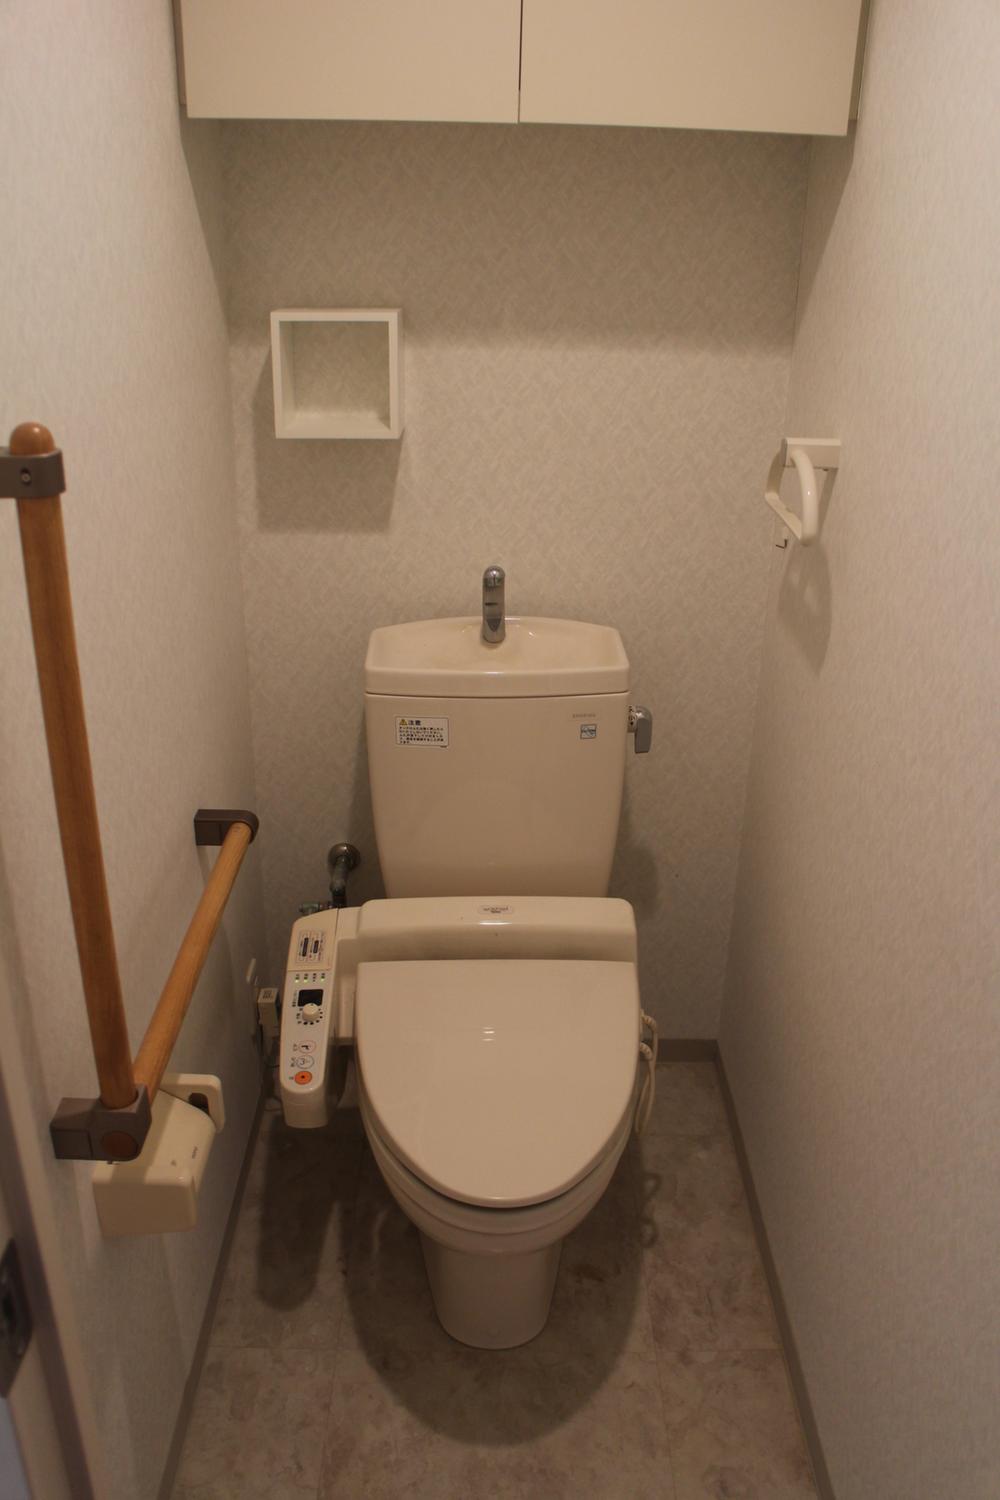 Toilet. Toilet (December 2013) Shooting